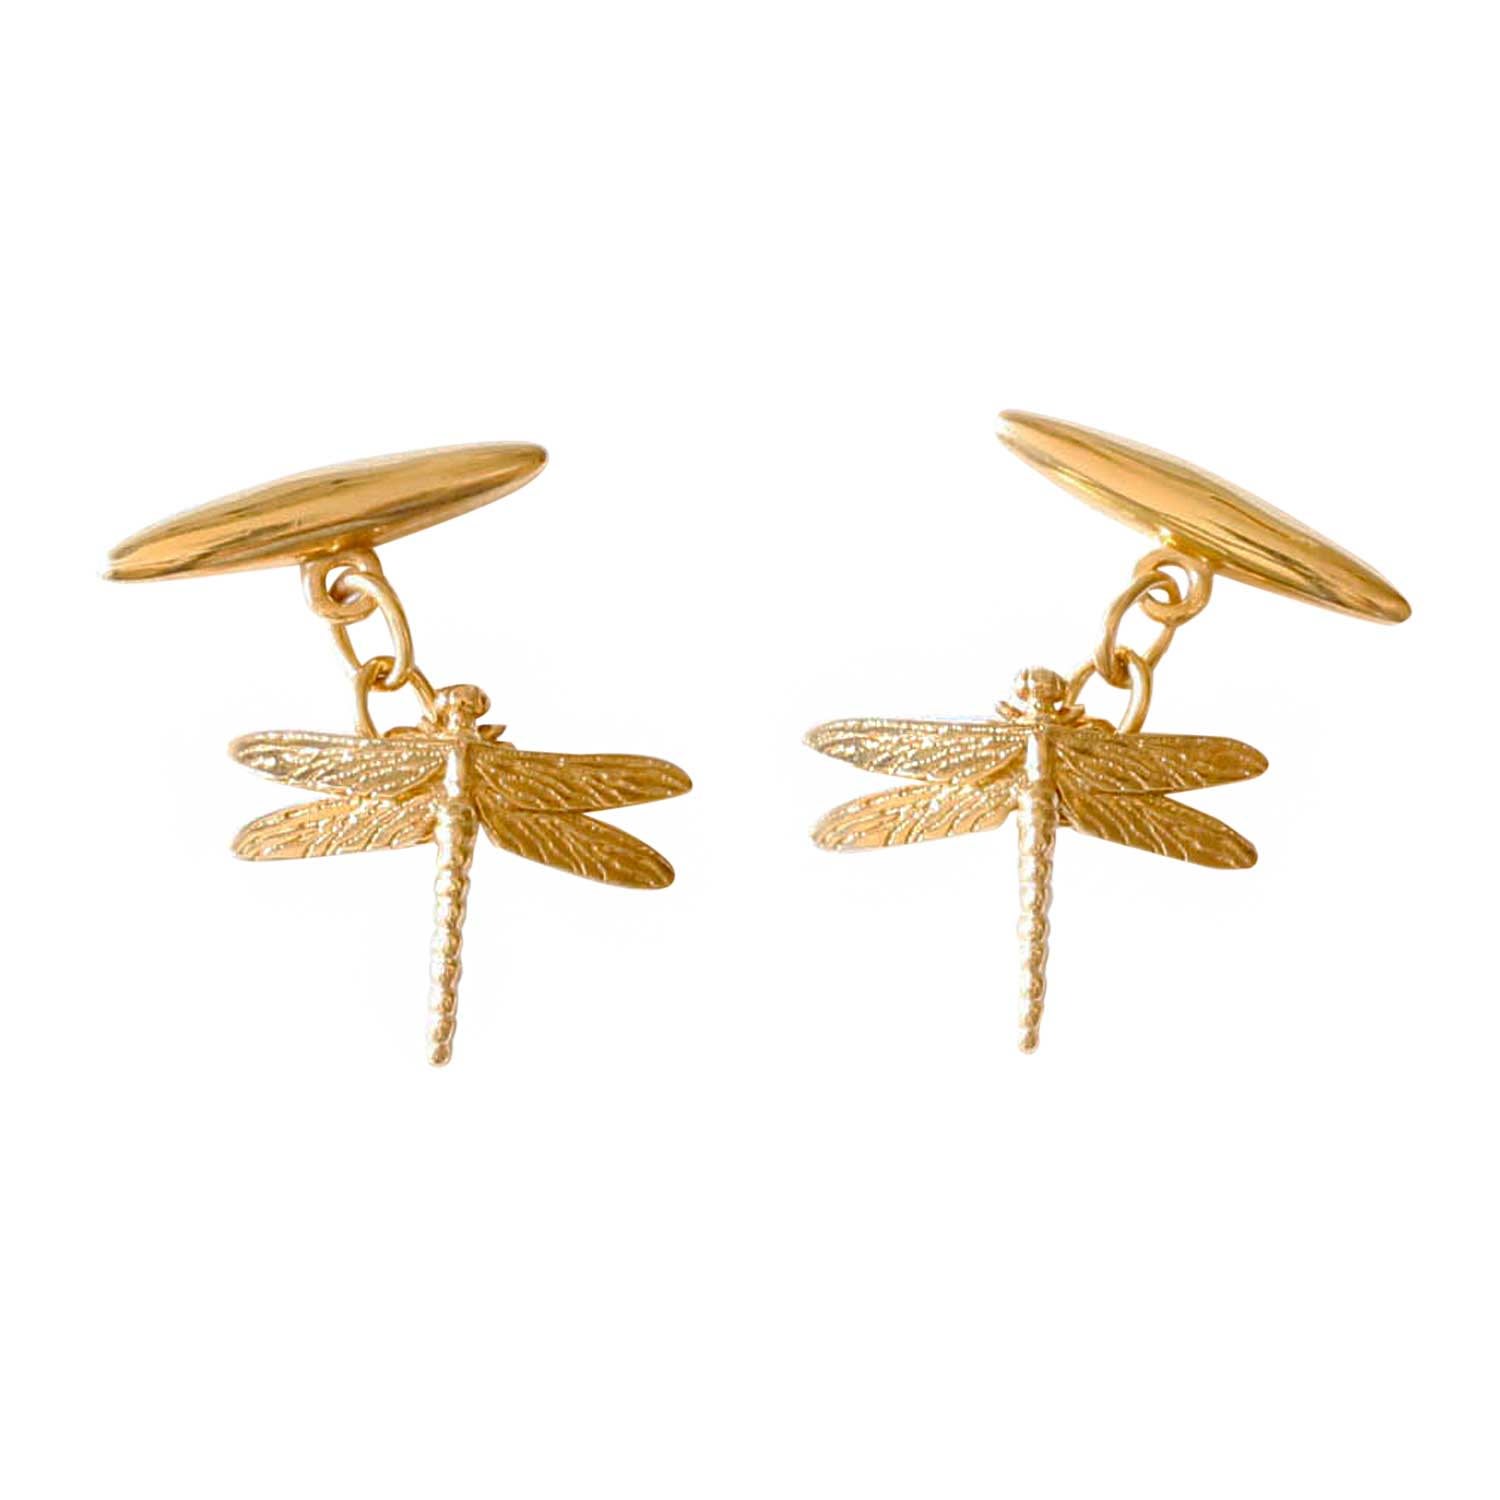 Lee Renee Men's Dragonfly Cufflinks – Gold